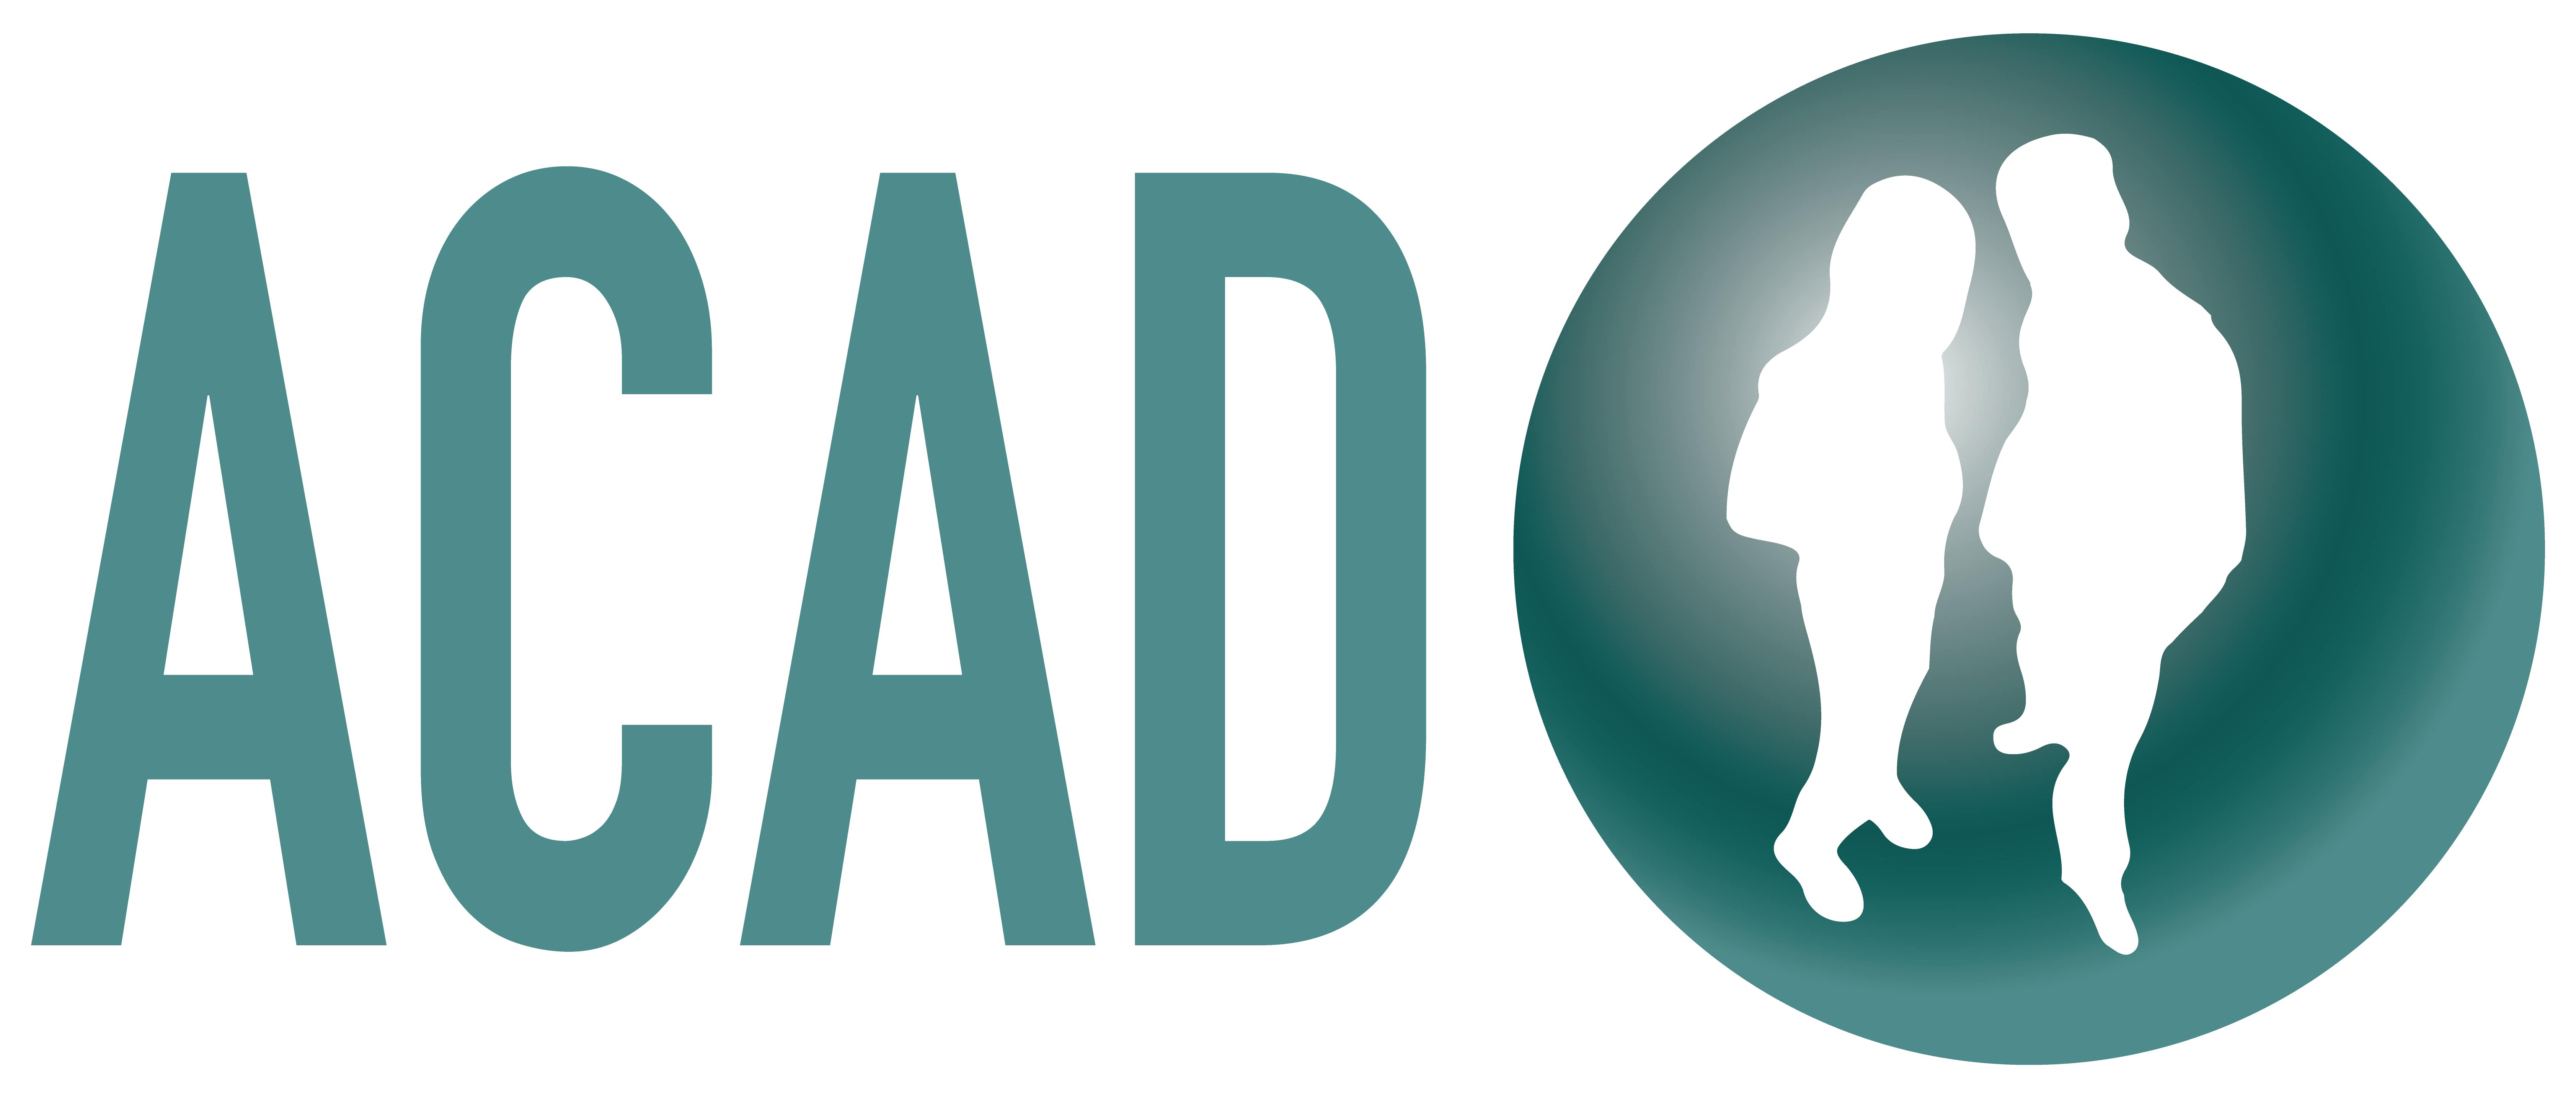 ACAD logo